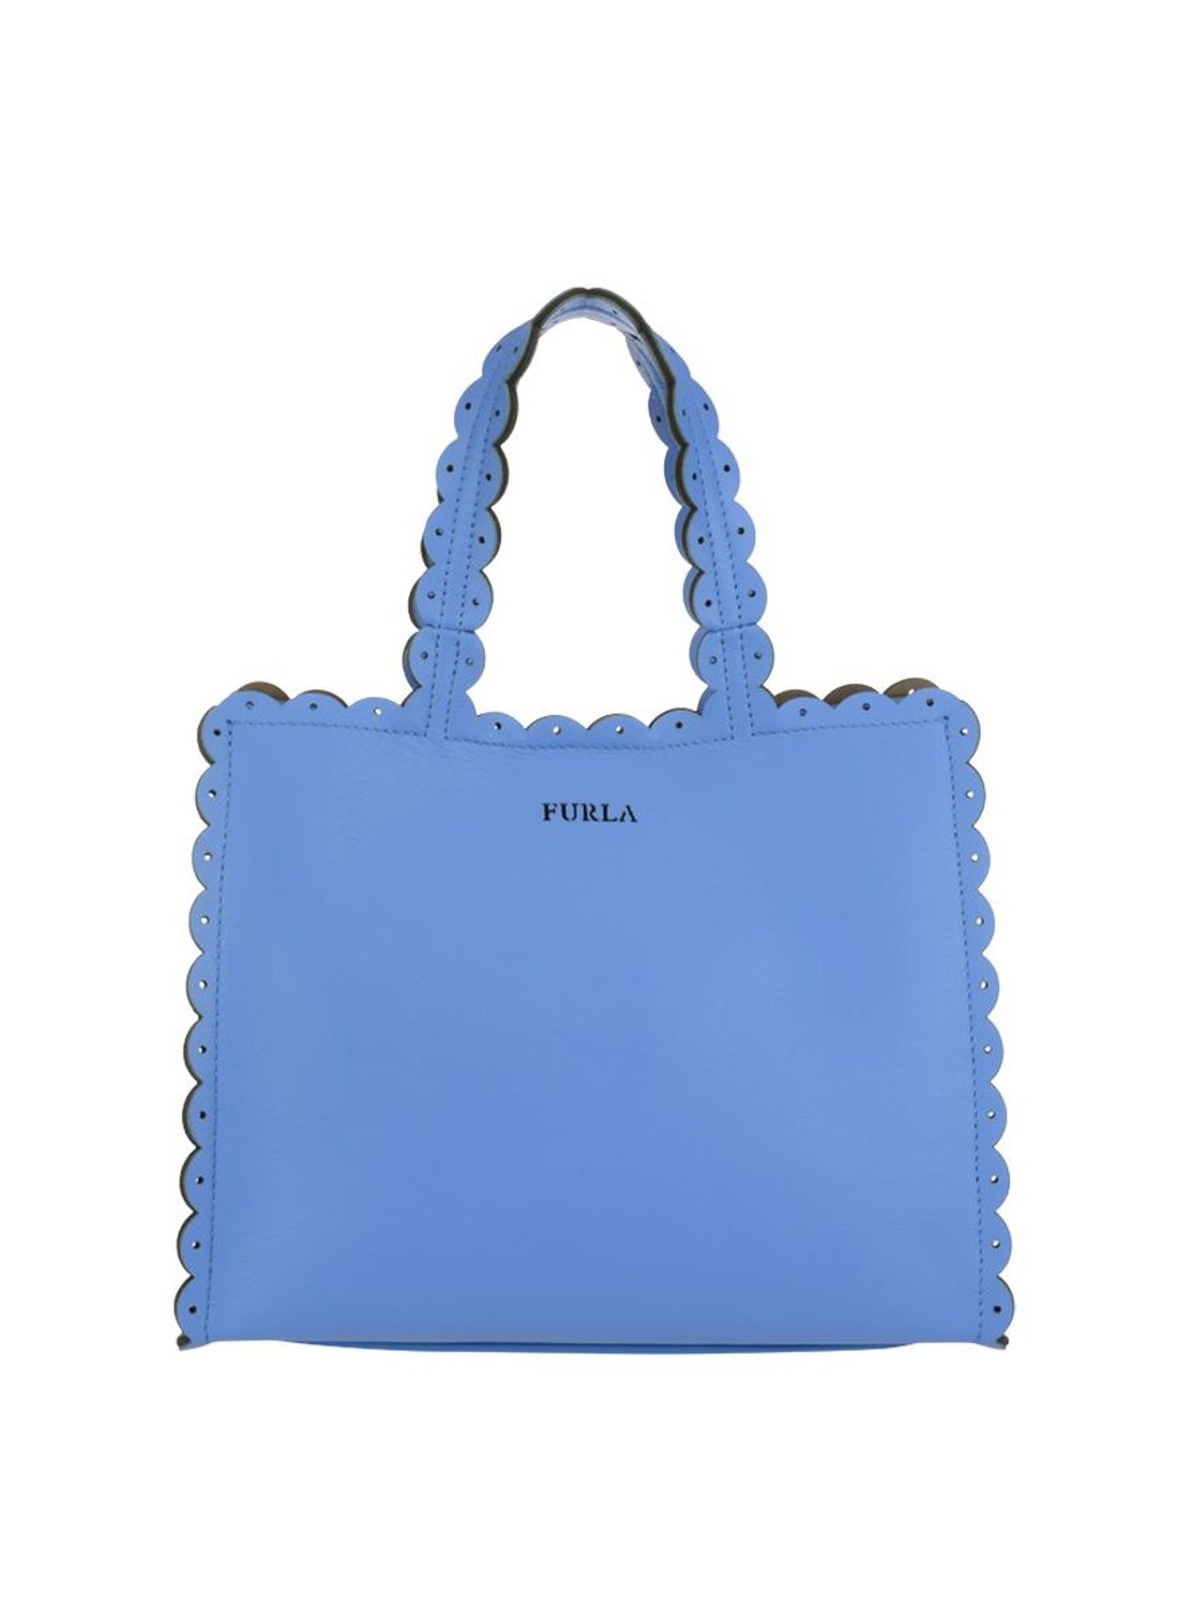 Totes bags Furla - Merletto light blue small tote - 941709